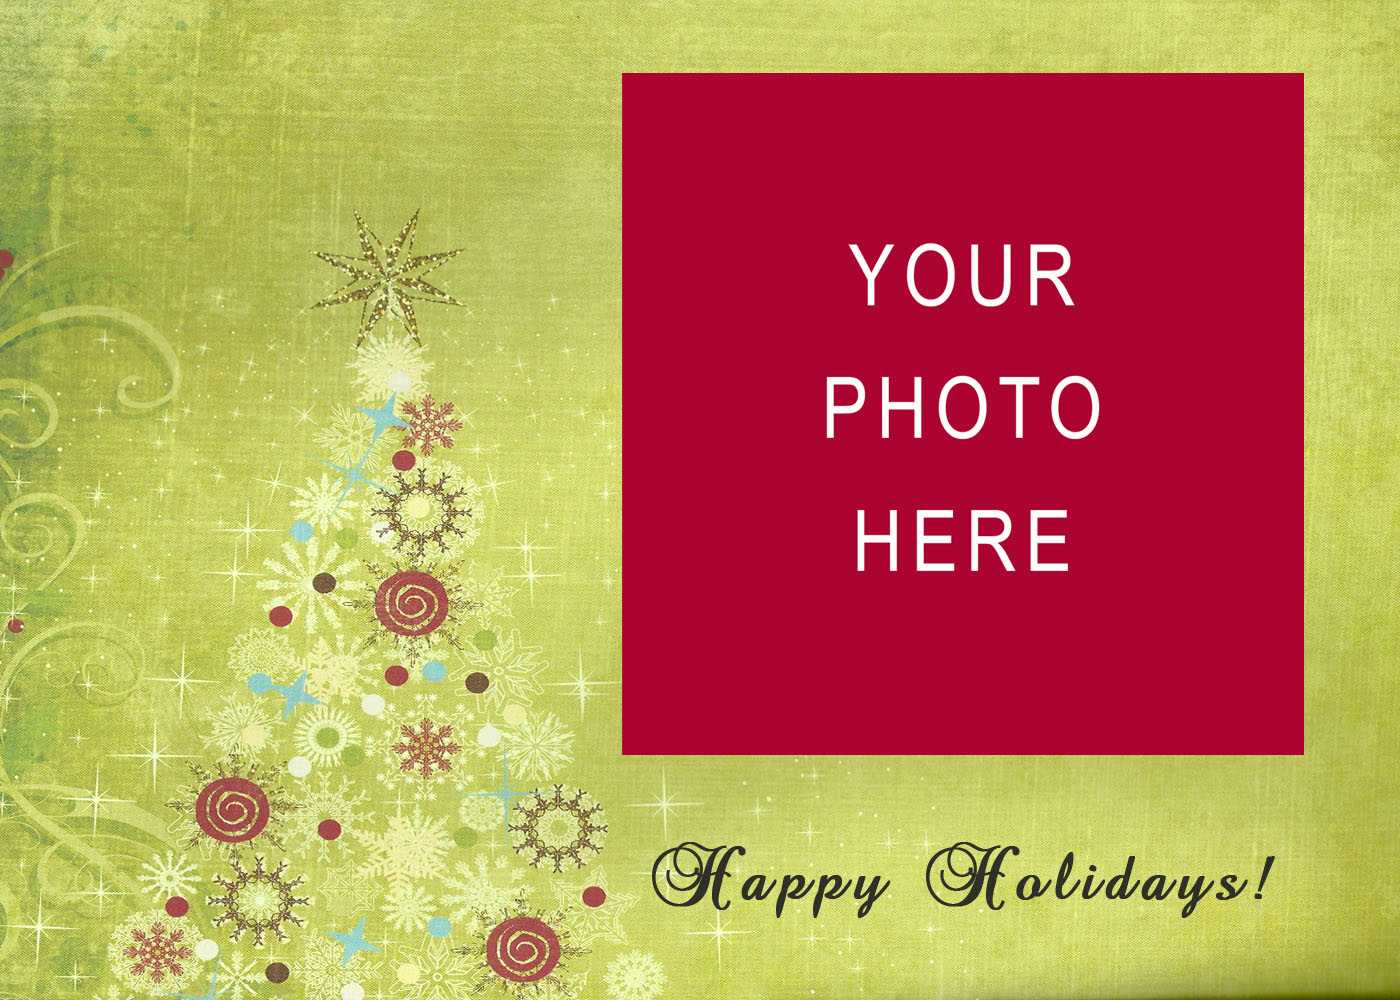 Free Christmas Card Templates | E Commercewordpress In Free Christmas Card Templates For Photographers